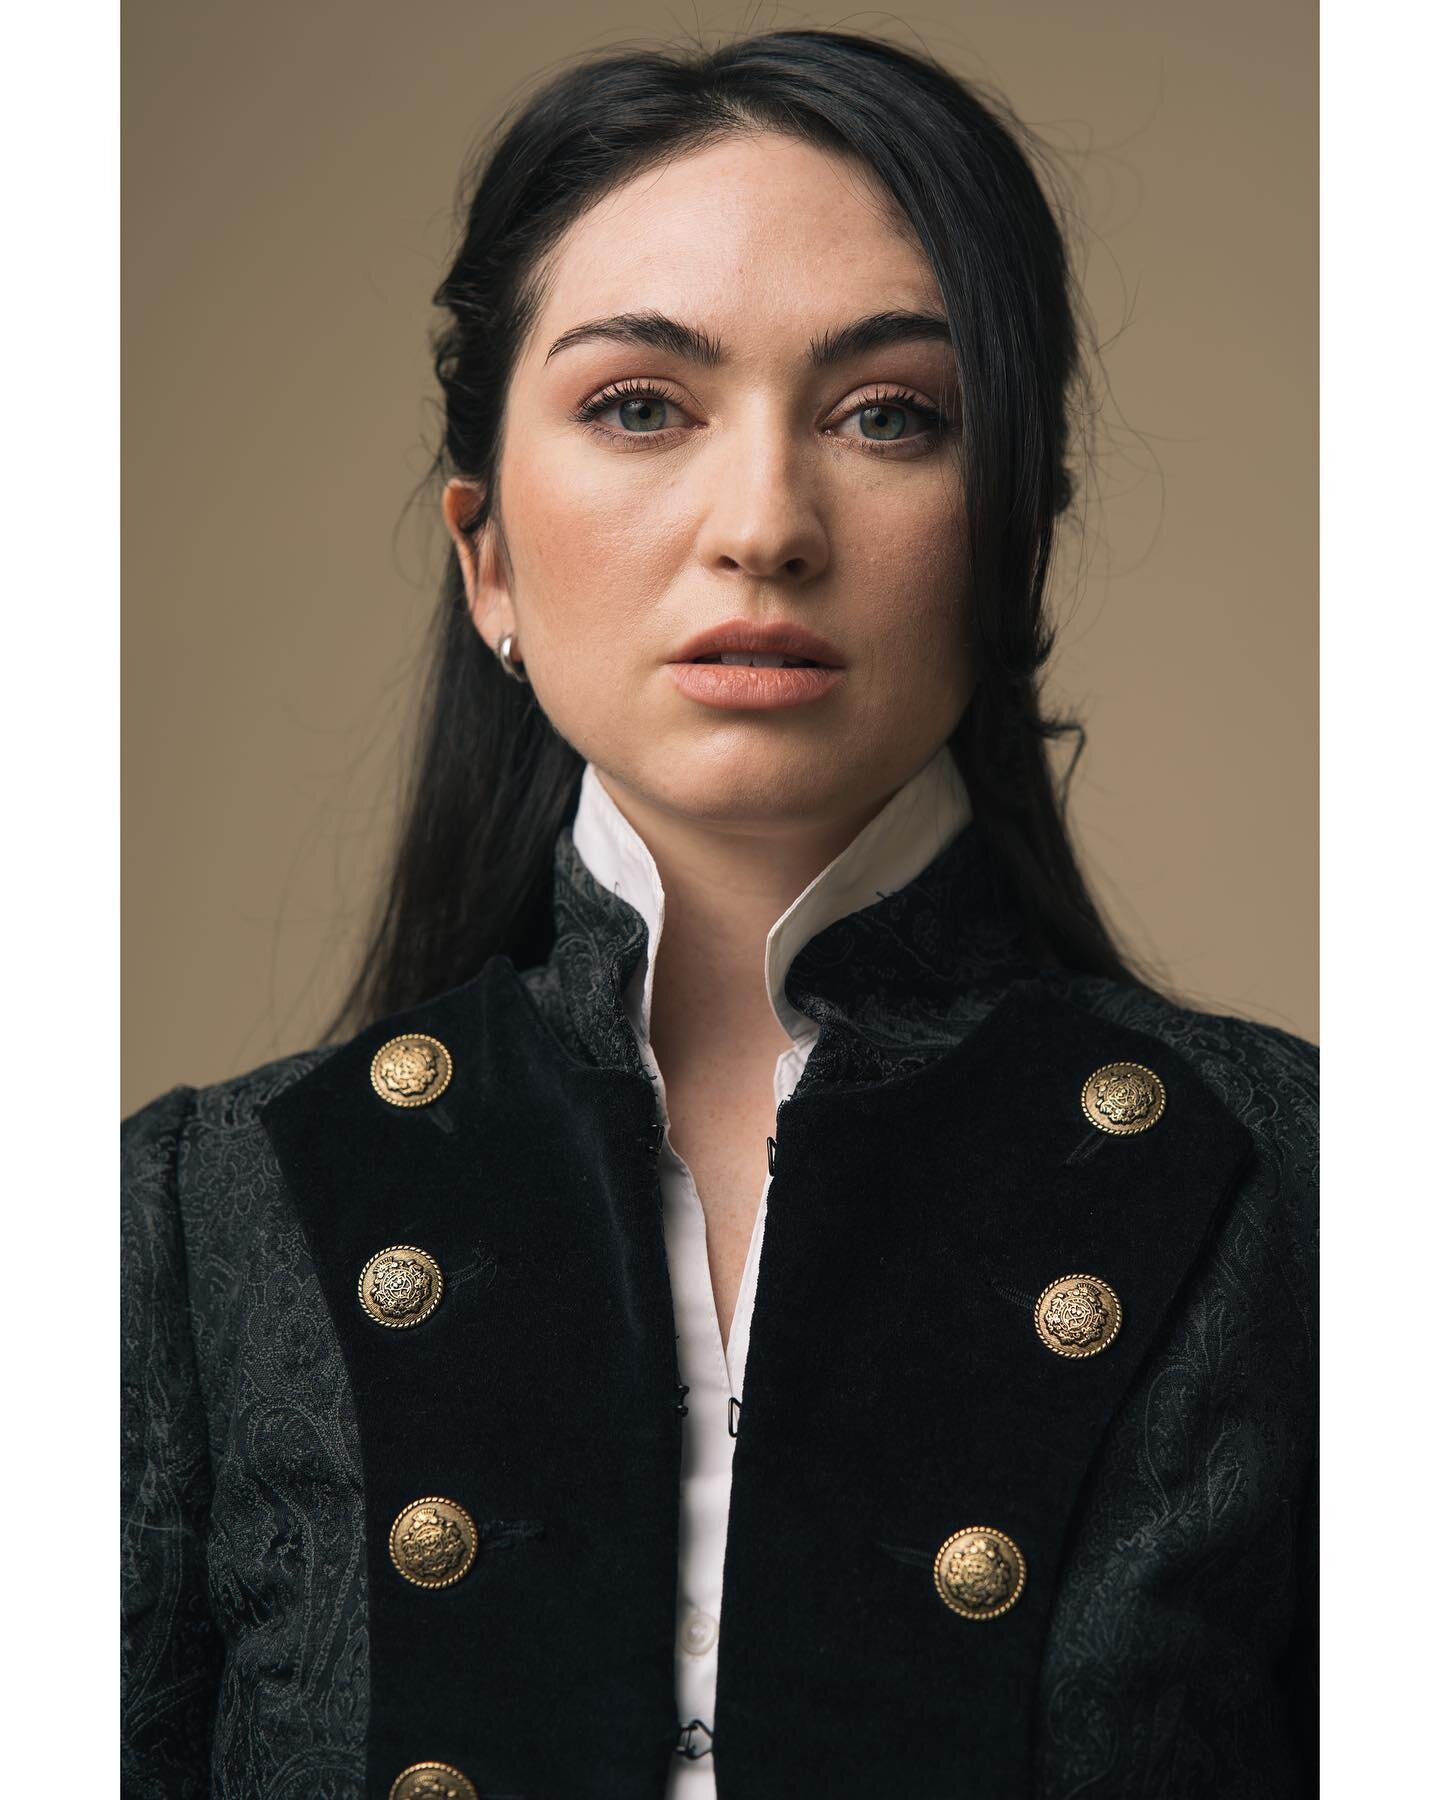 𝐖𝐨𝐦𝐚𝐧 𝐢𝐧 𝐚 𝐩𝐞𝐫𝐢𝐨𝐝 𝐩𝐢𝐞𝐜𝐞 𝐩𝐮𝐫𝐬𝐢𝐧𝐠 𝐚 &ldquo;𝐦𝐚𝐧&rsquo;𝐬&rdquo; 𝐜𝐚𝐫𝐞𝐞𝐫
.
.
📸/💄: @thealexleyva 
.
.
.
#actress #periodpiece #acting #casting #renaissancewoman #1776 #jomarch #revolution #portrait #lesmiserables